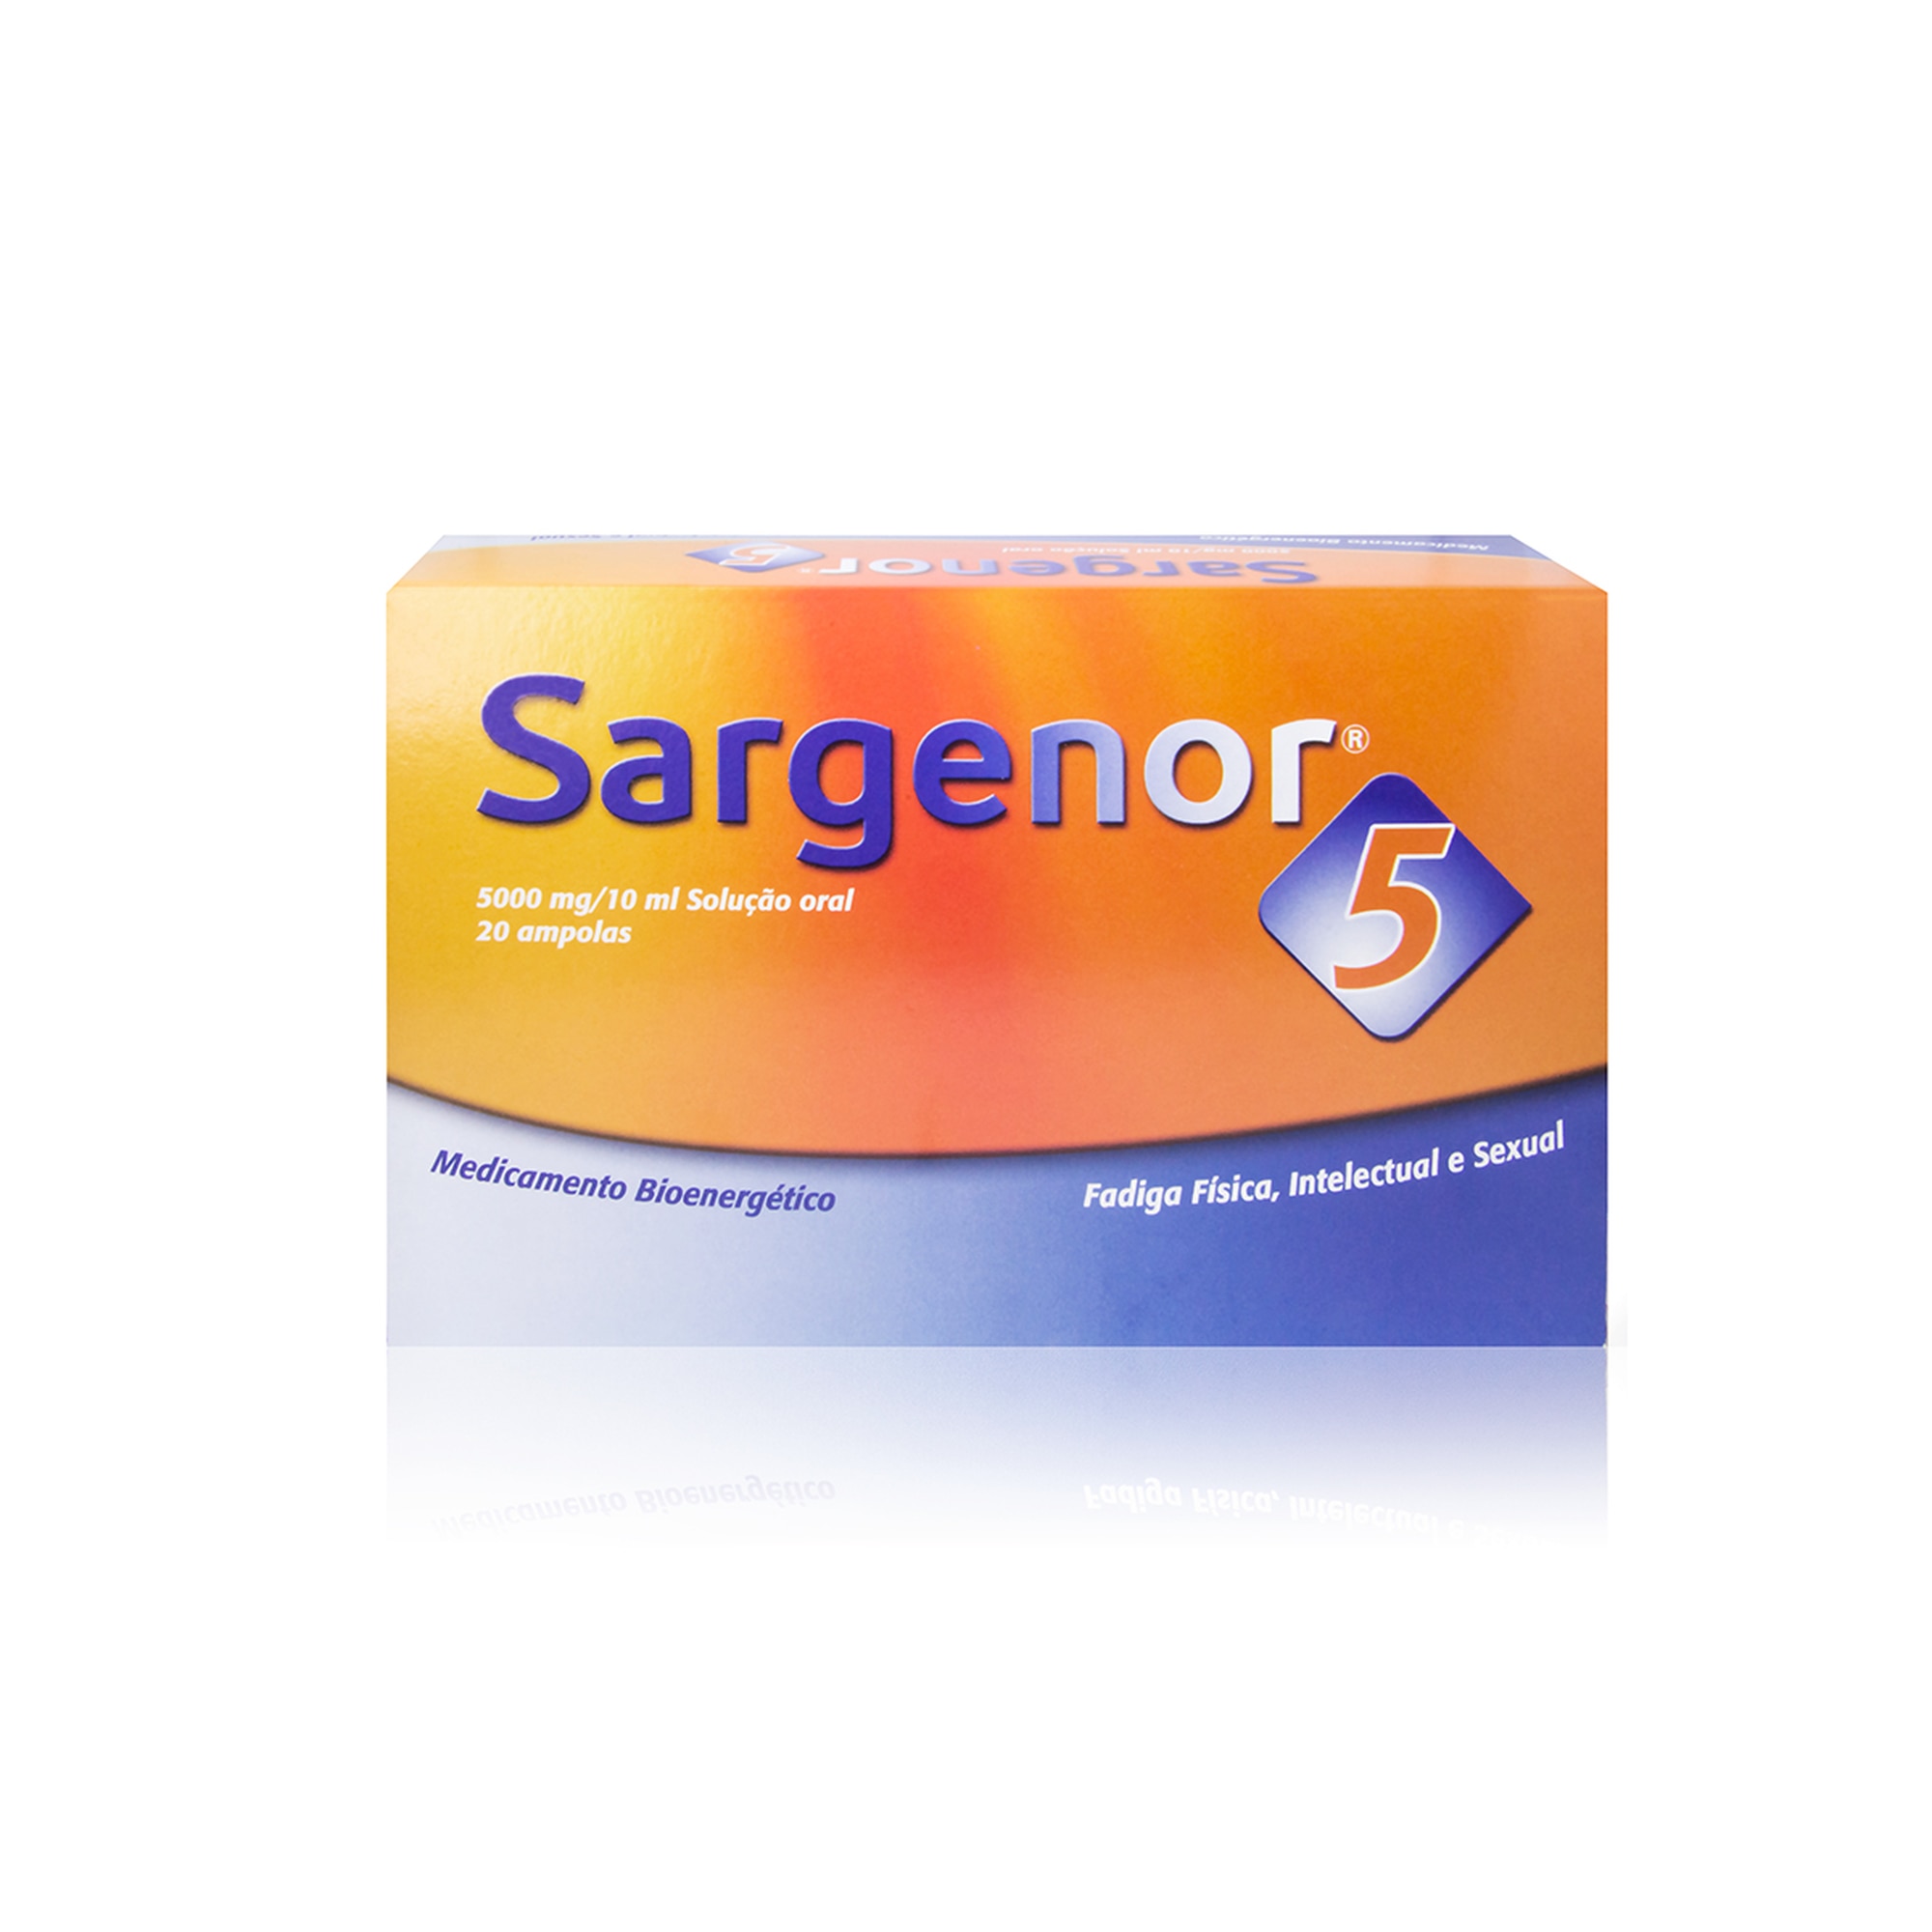 Sargenor 5 - image 0